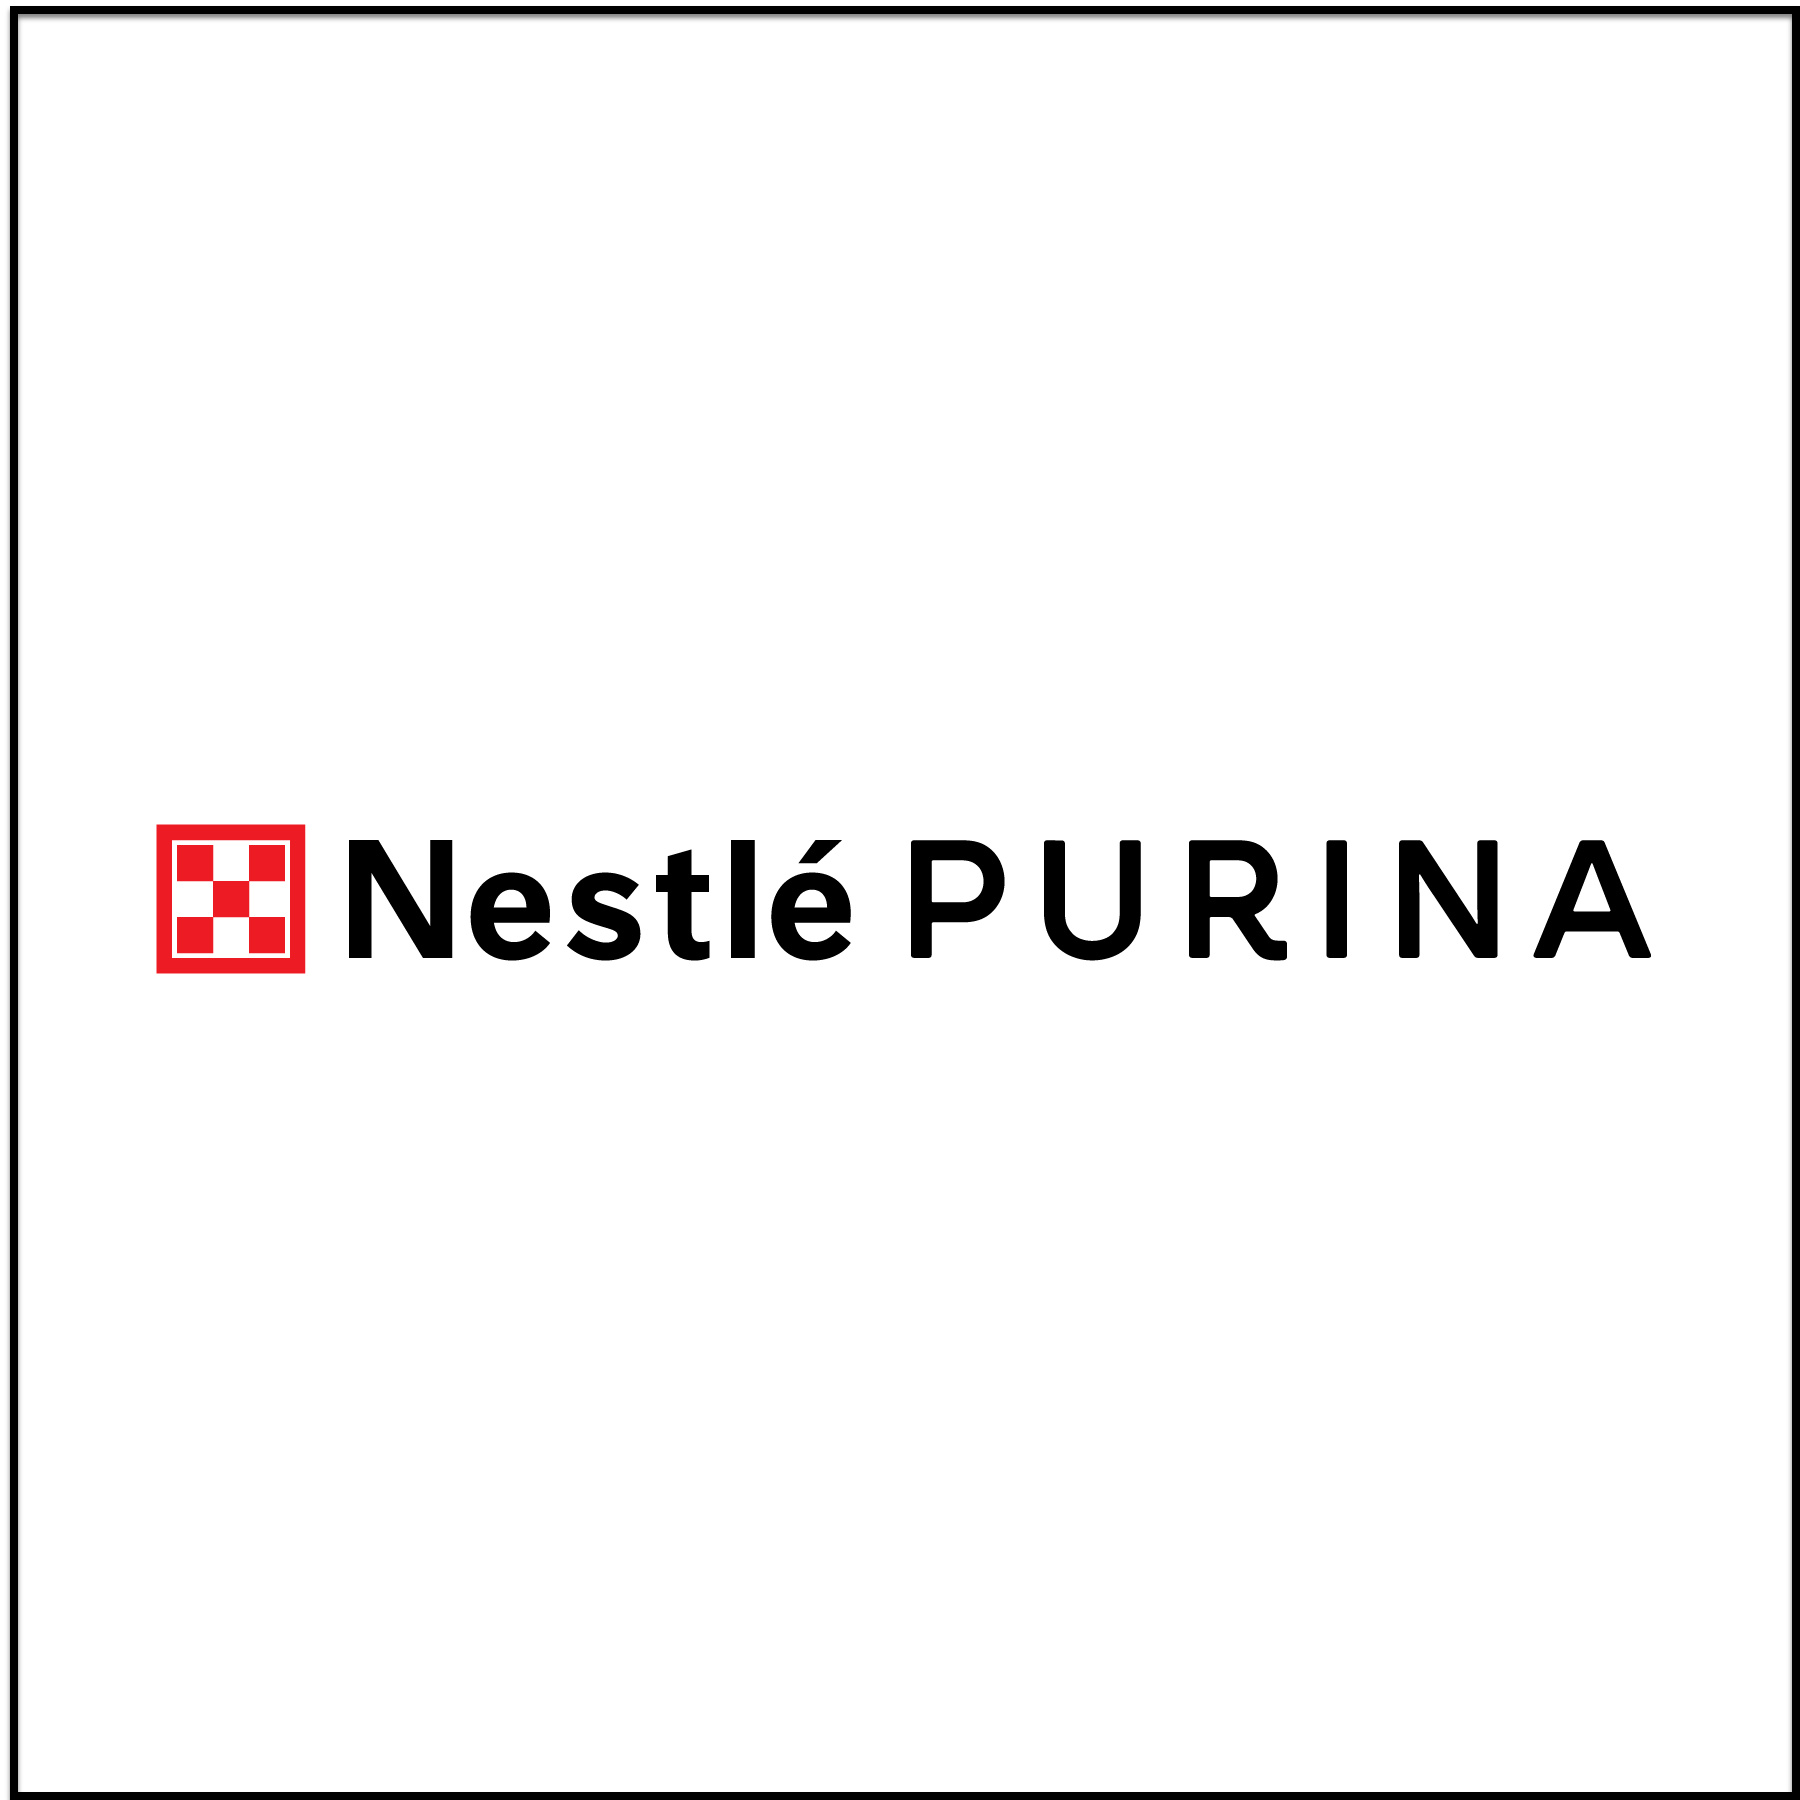 NestlePurina logo.png